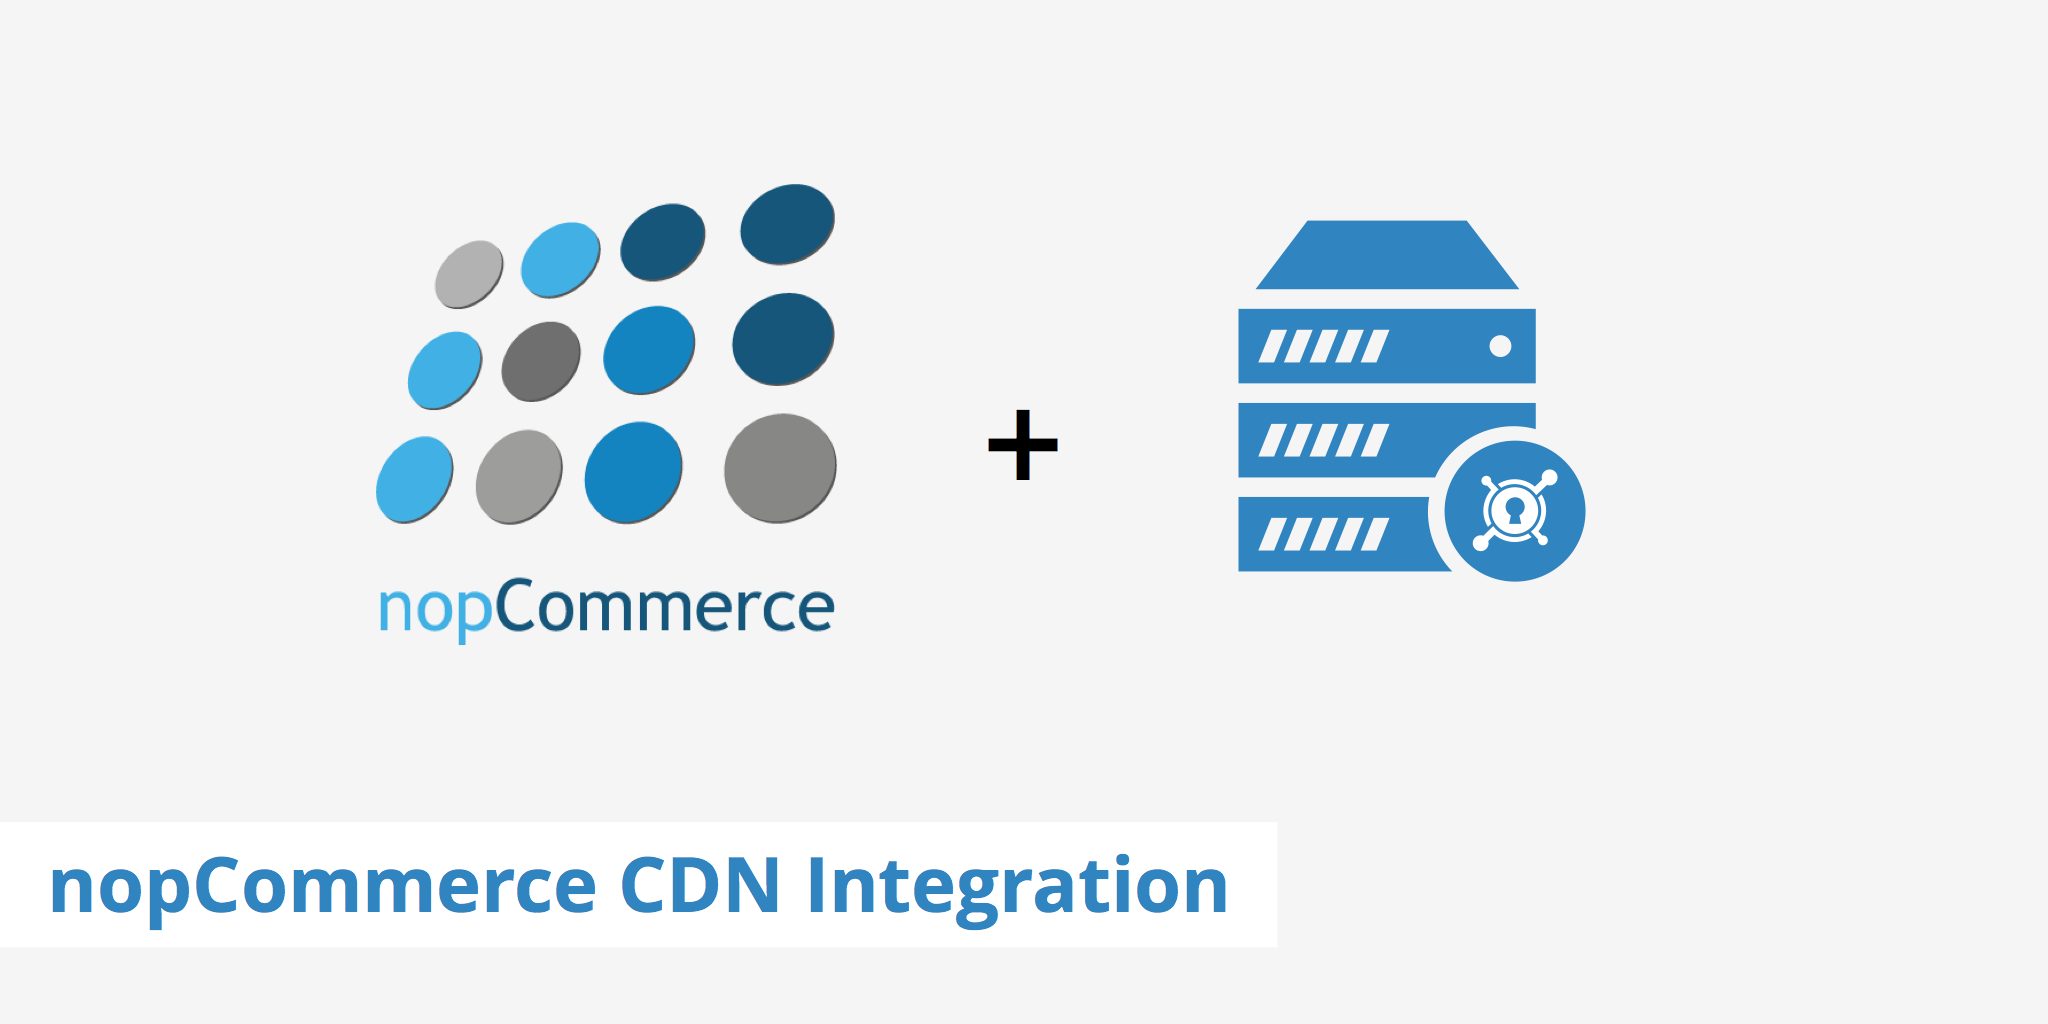 nopCommerce CDN Integration